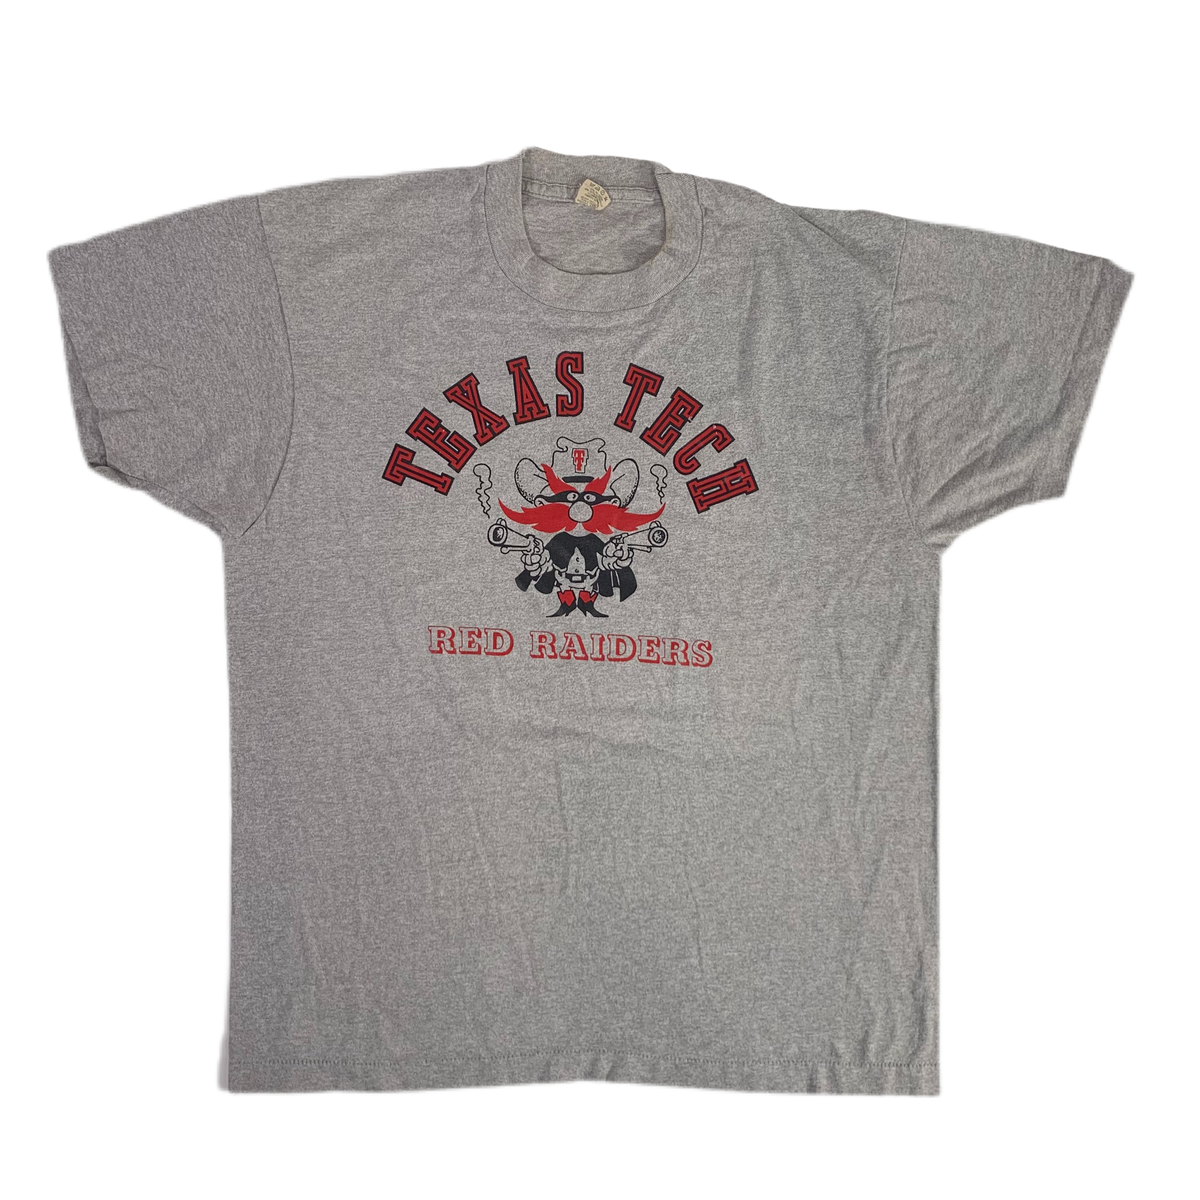 Vintage Texas Tech &quot;Red Raiders&quot; T-Shirt